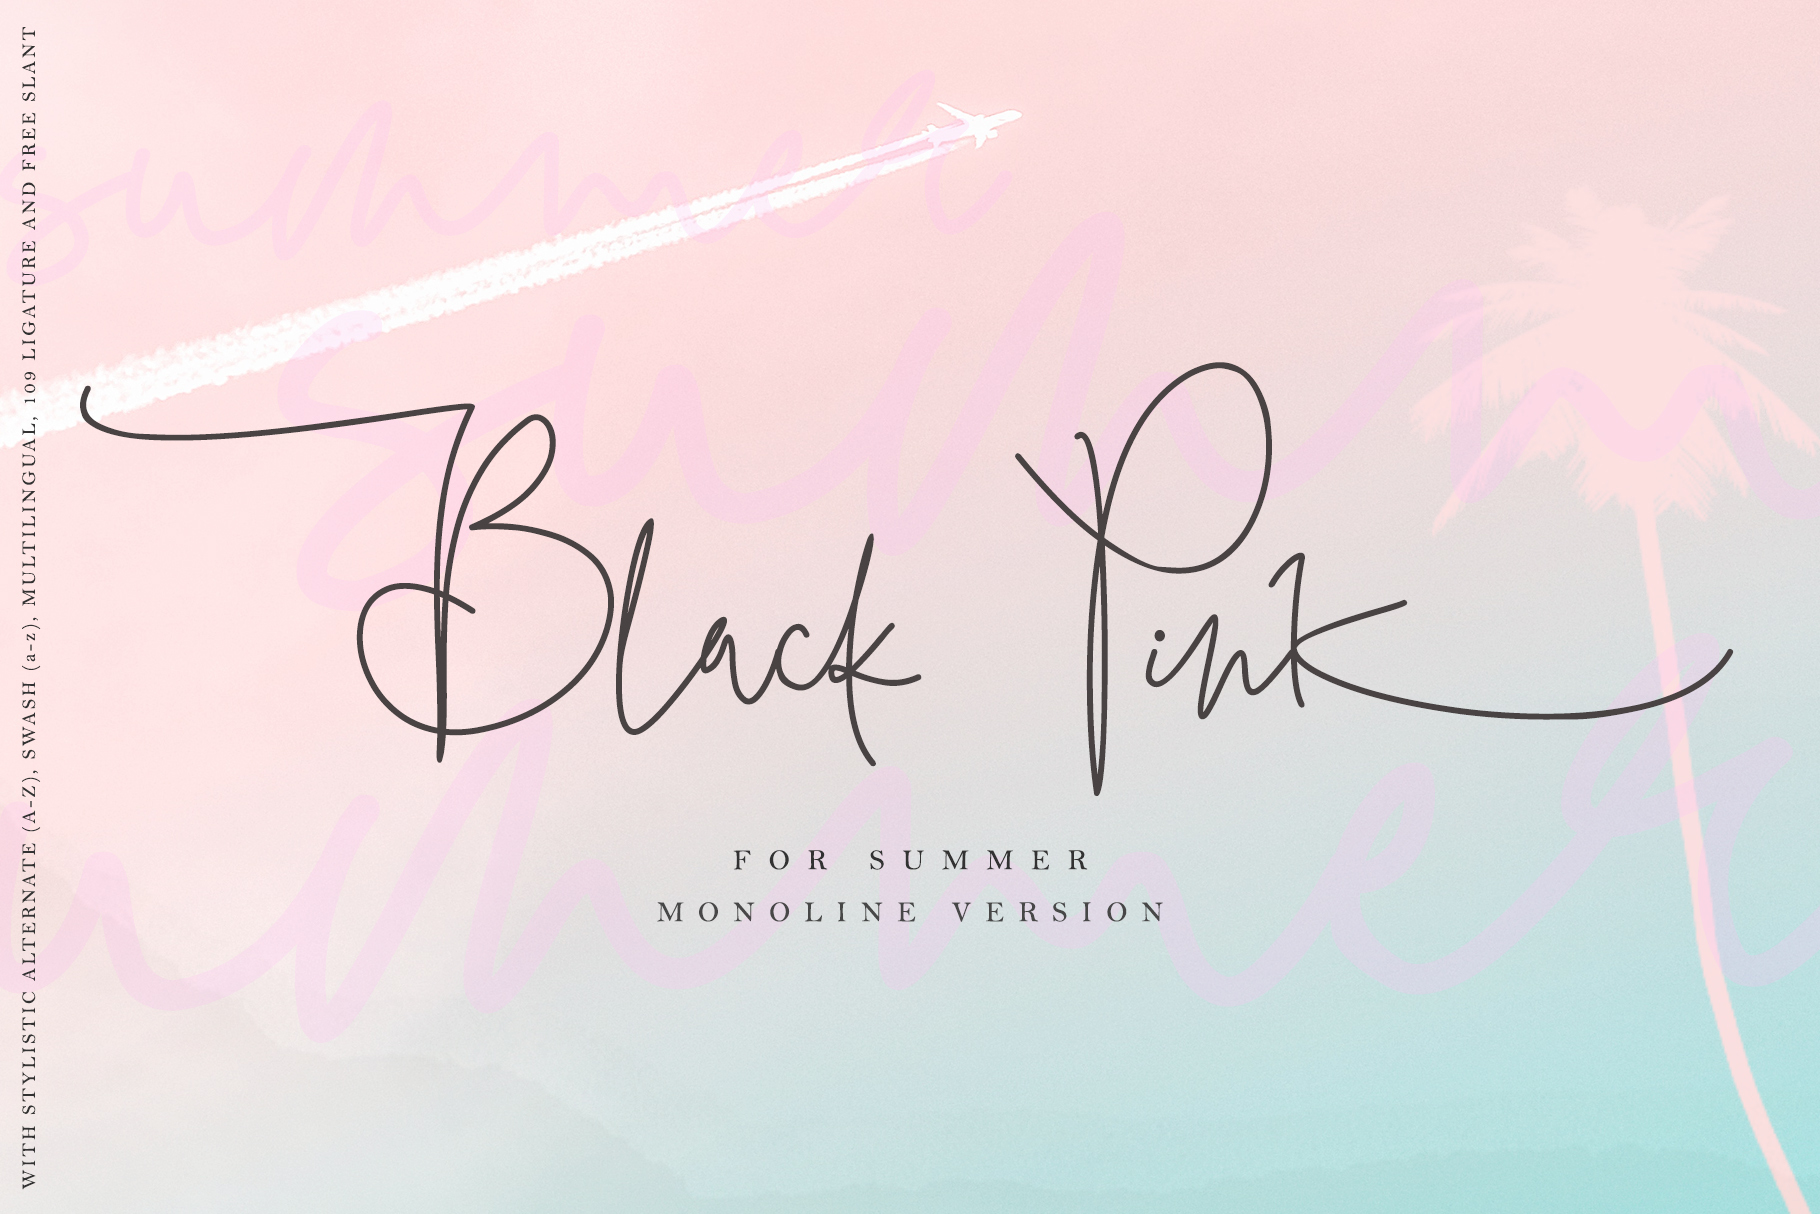 Black Pink Summer